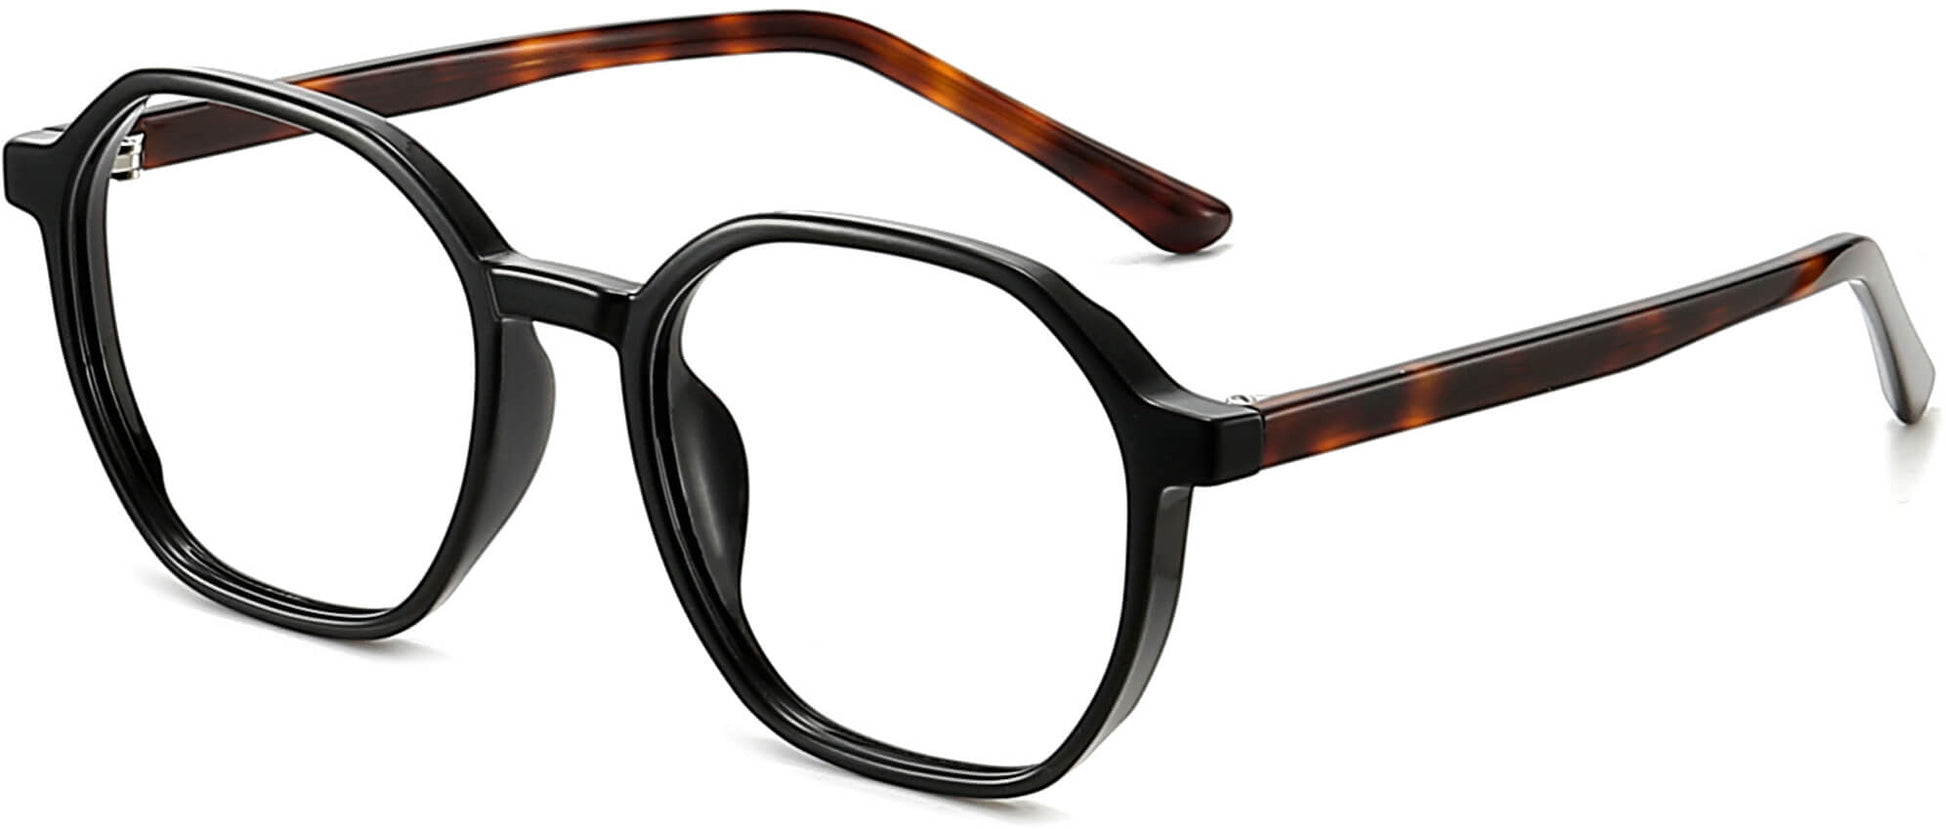 Archie Geometric Black Eyeglasses from ANRRI, angle view